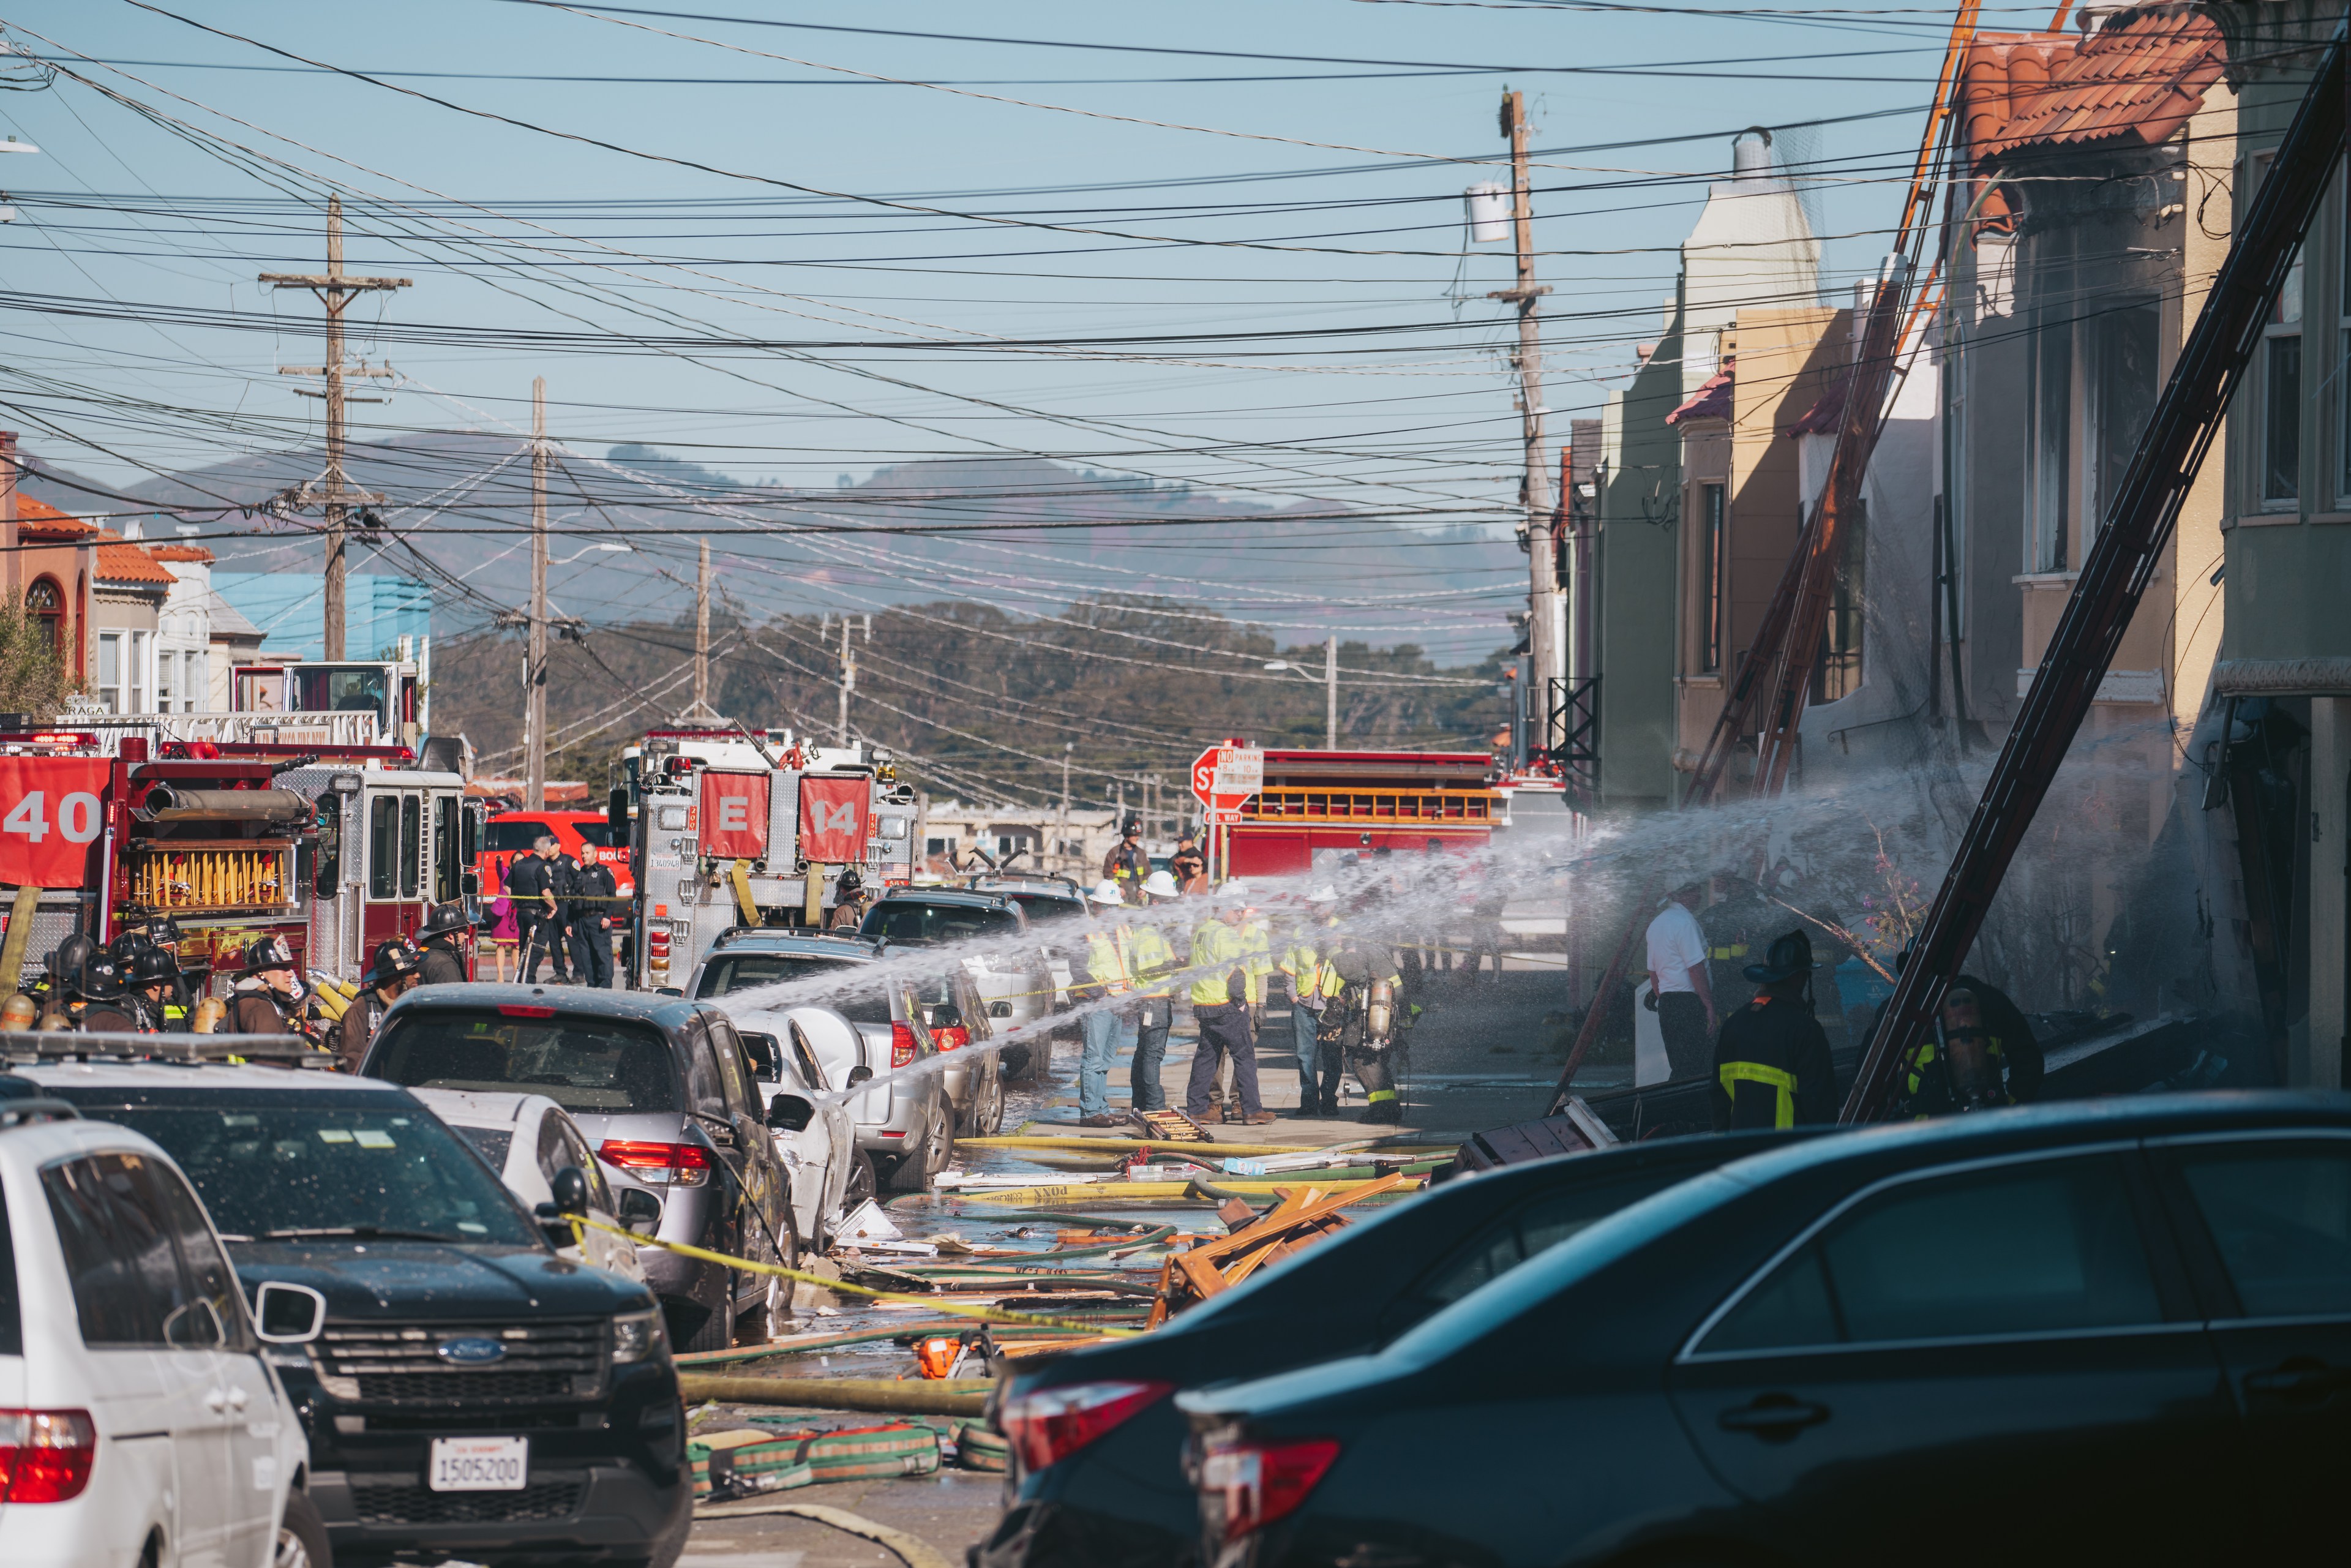 San Francisco Home Explosion Suspect Arrested on Suspicion of Murder